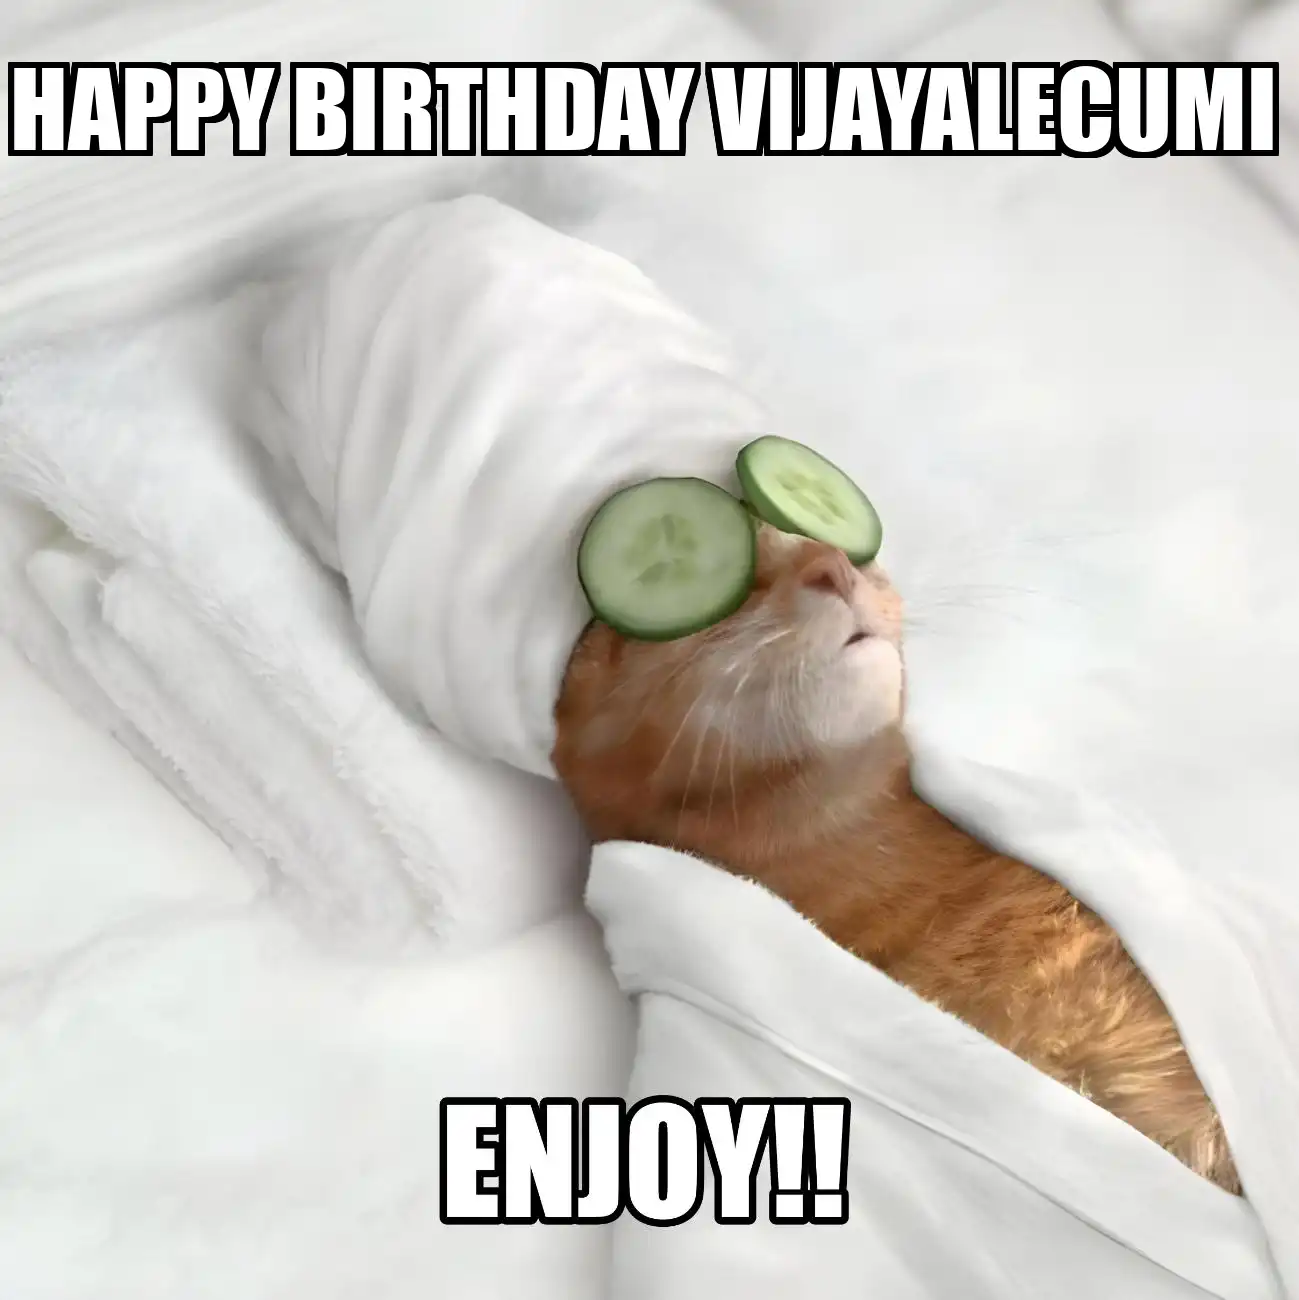 Happy Birthday Vijayalecumi Enjoy Cat Meme